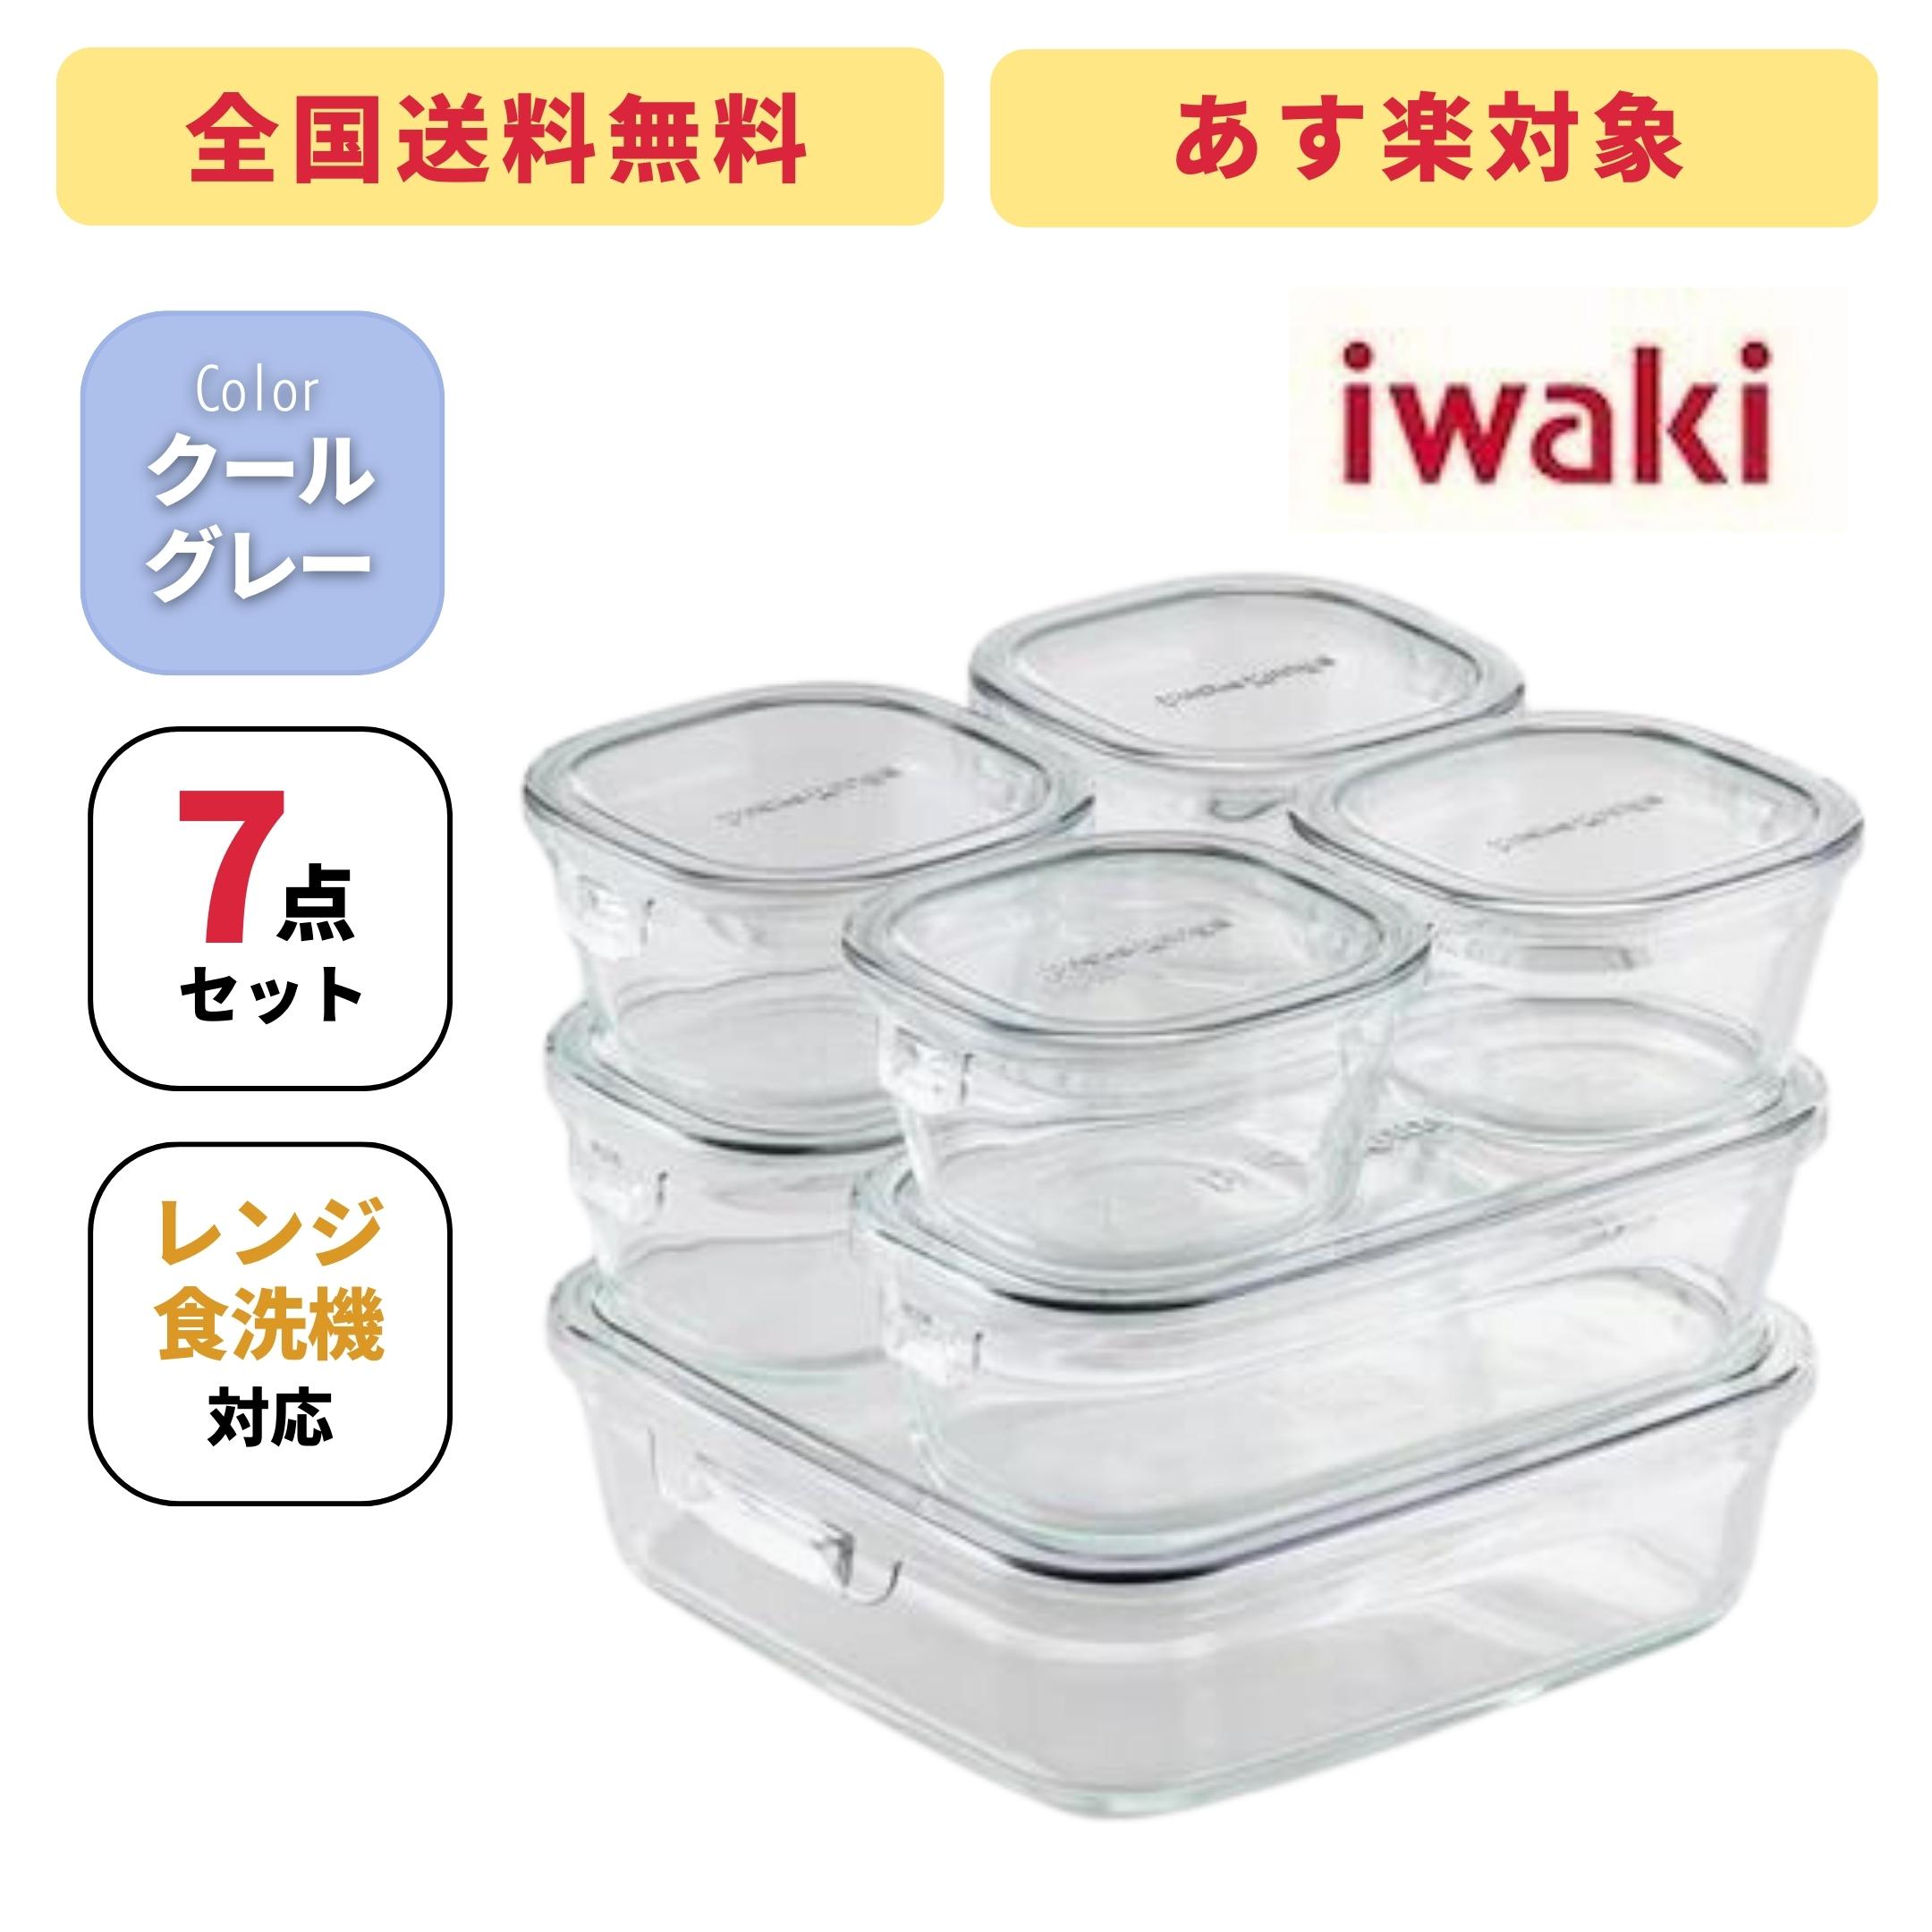 iwaki イワキ 耐熱ガラス パック&レン